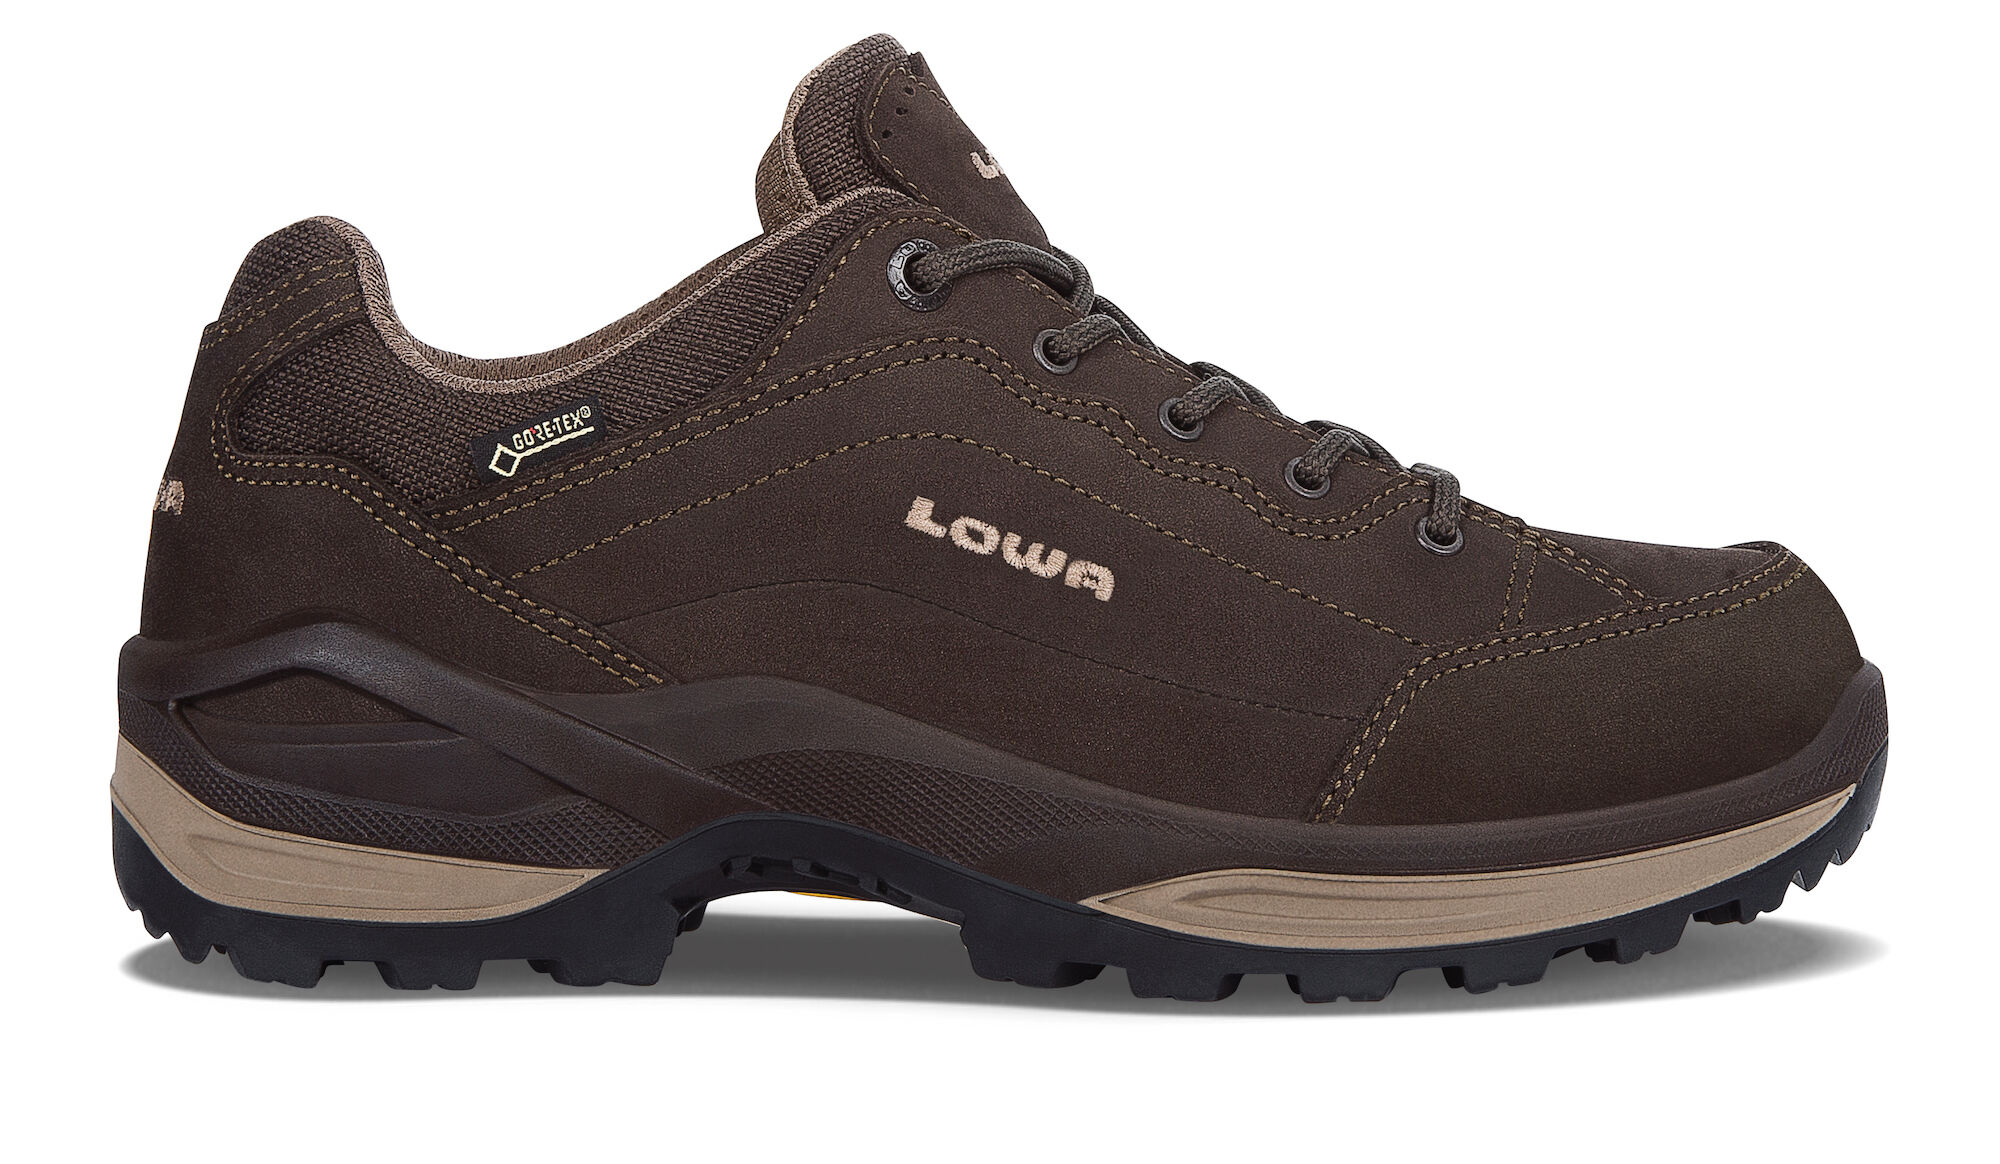 Lowa - Renegade GTX® Low Ws - Walking Boots - Women's